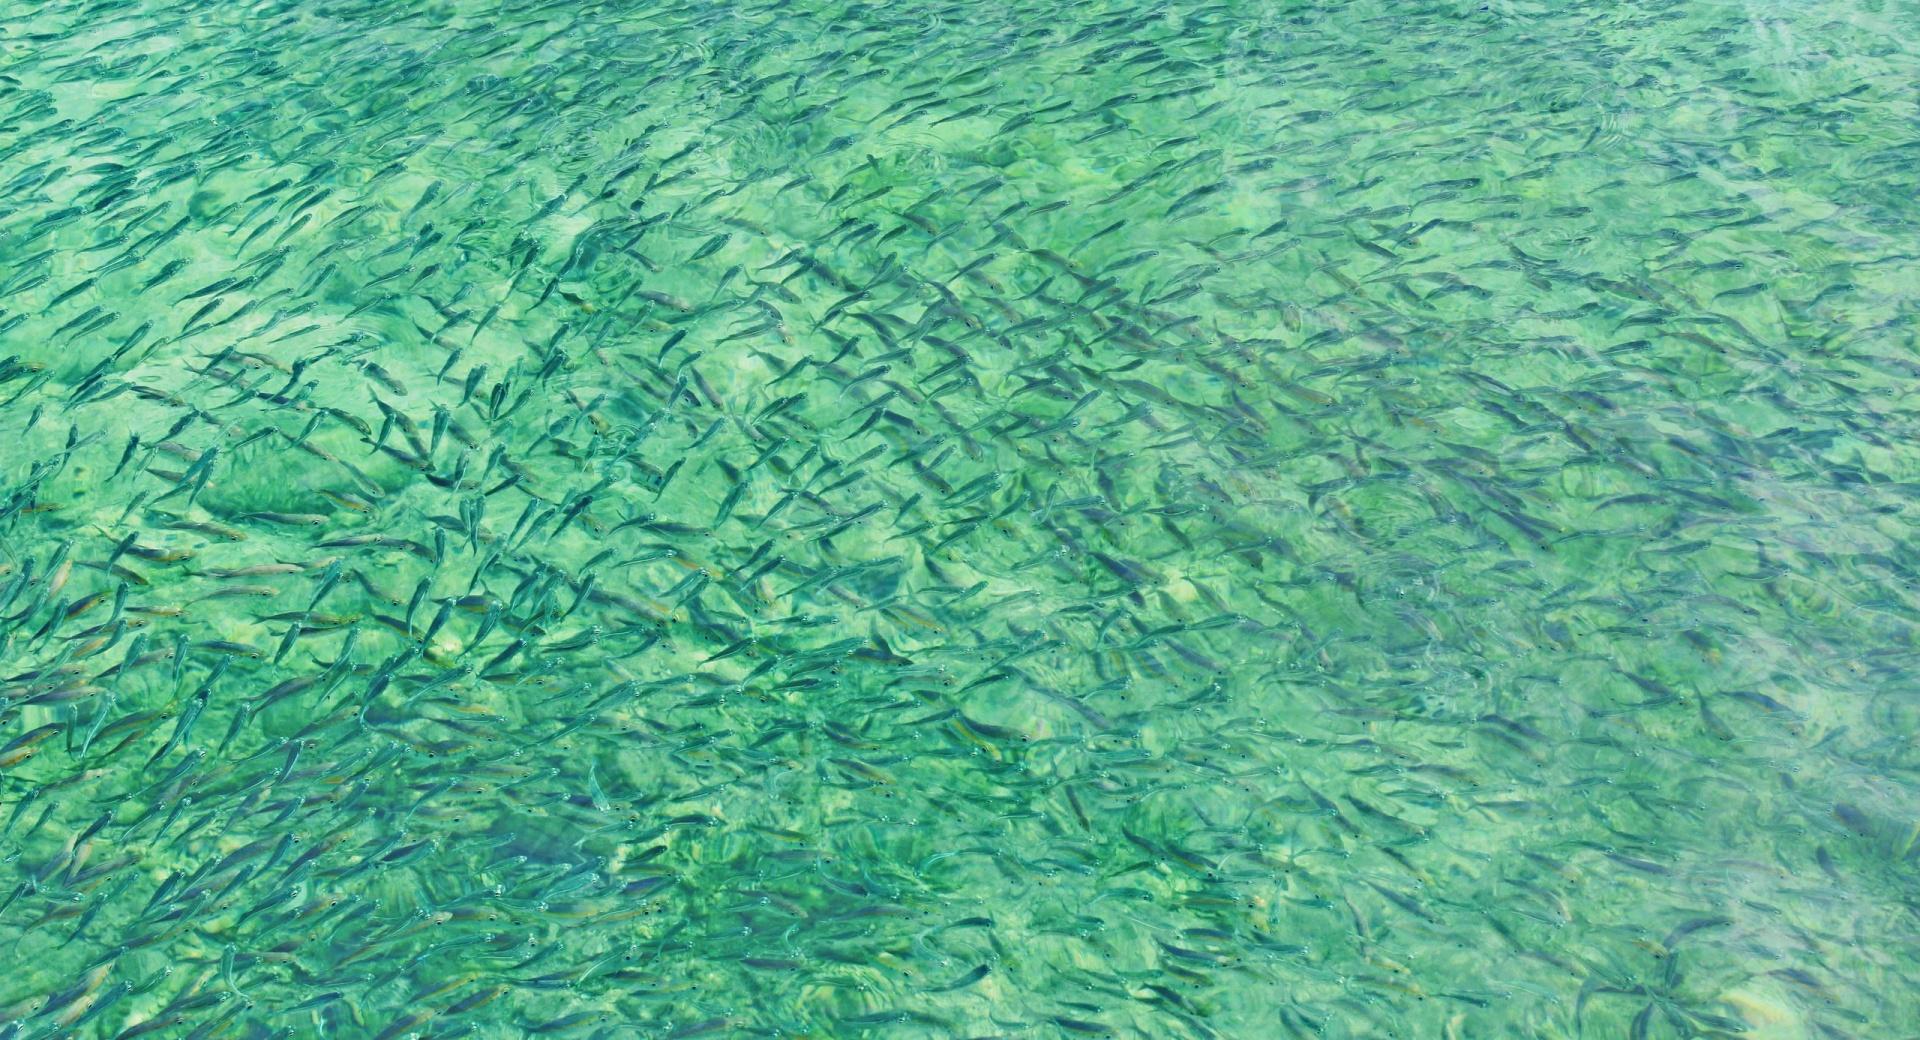 Ikan Ikan Kecil at 640 x 960 iPhone 4 size wallpapers HD quality